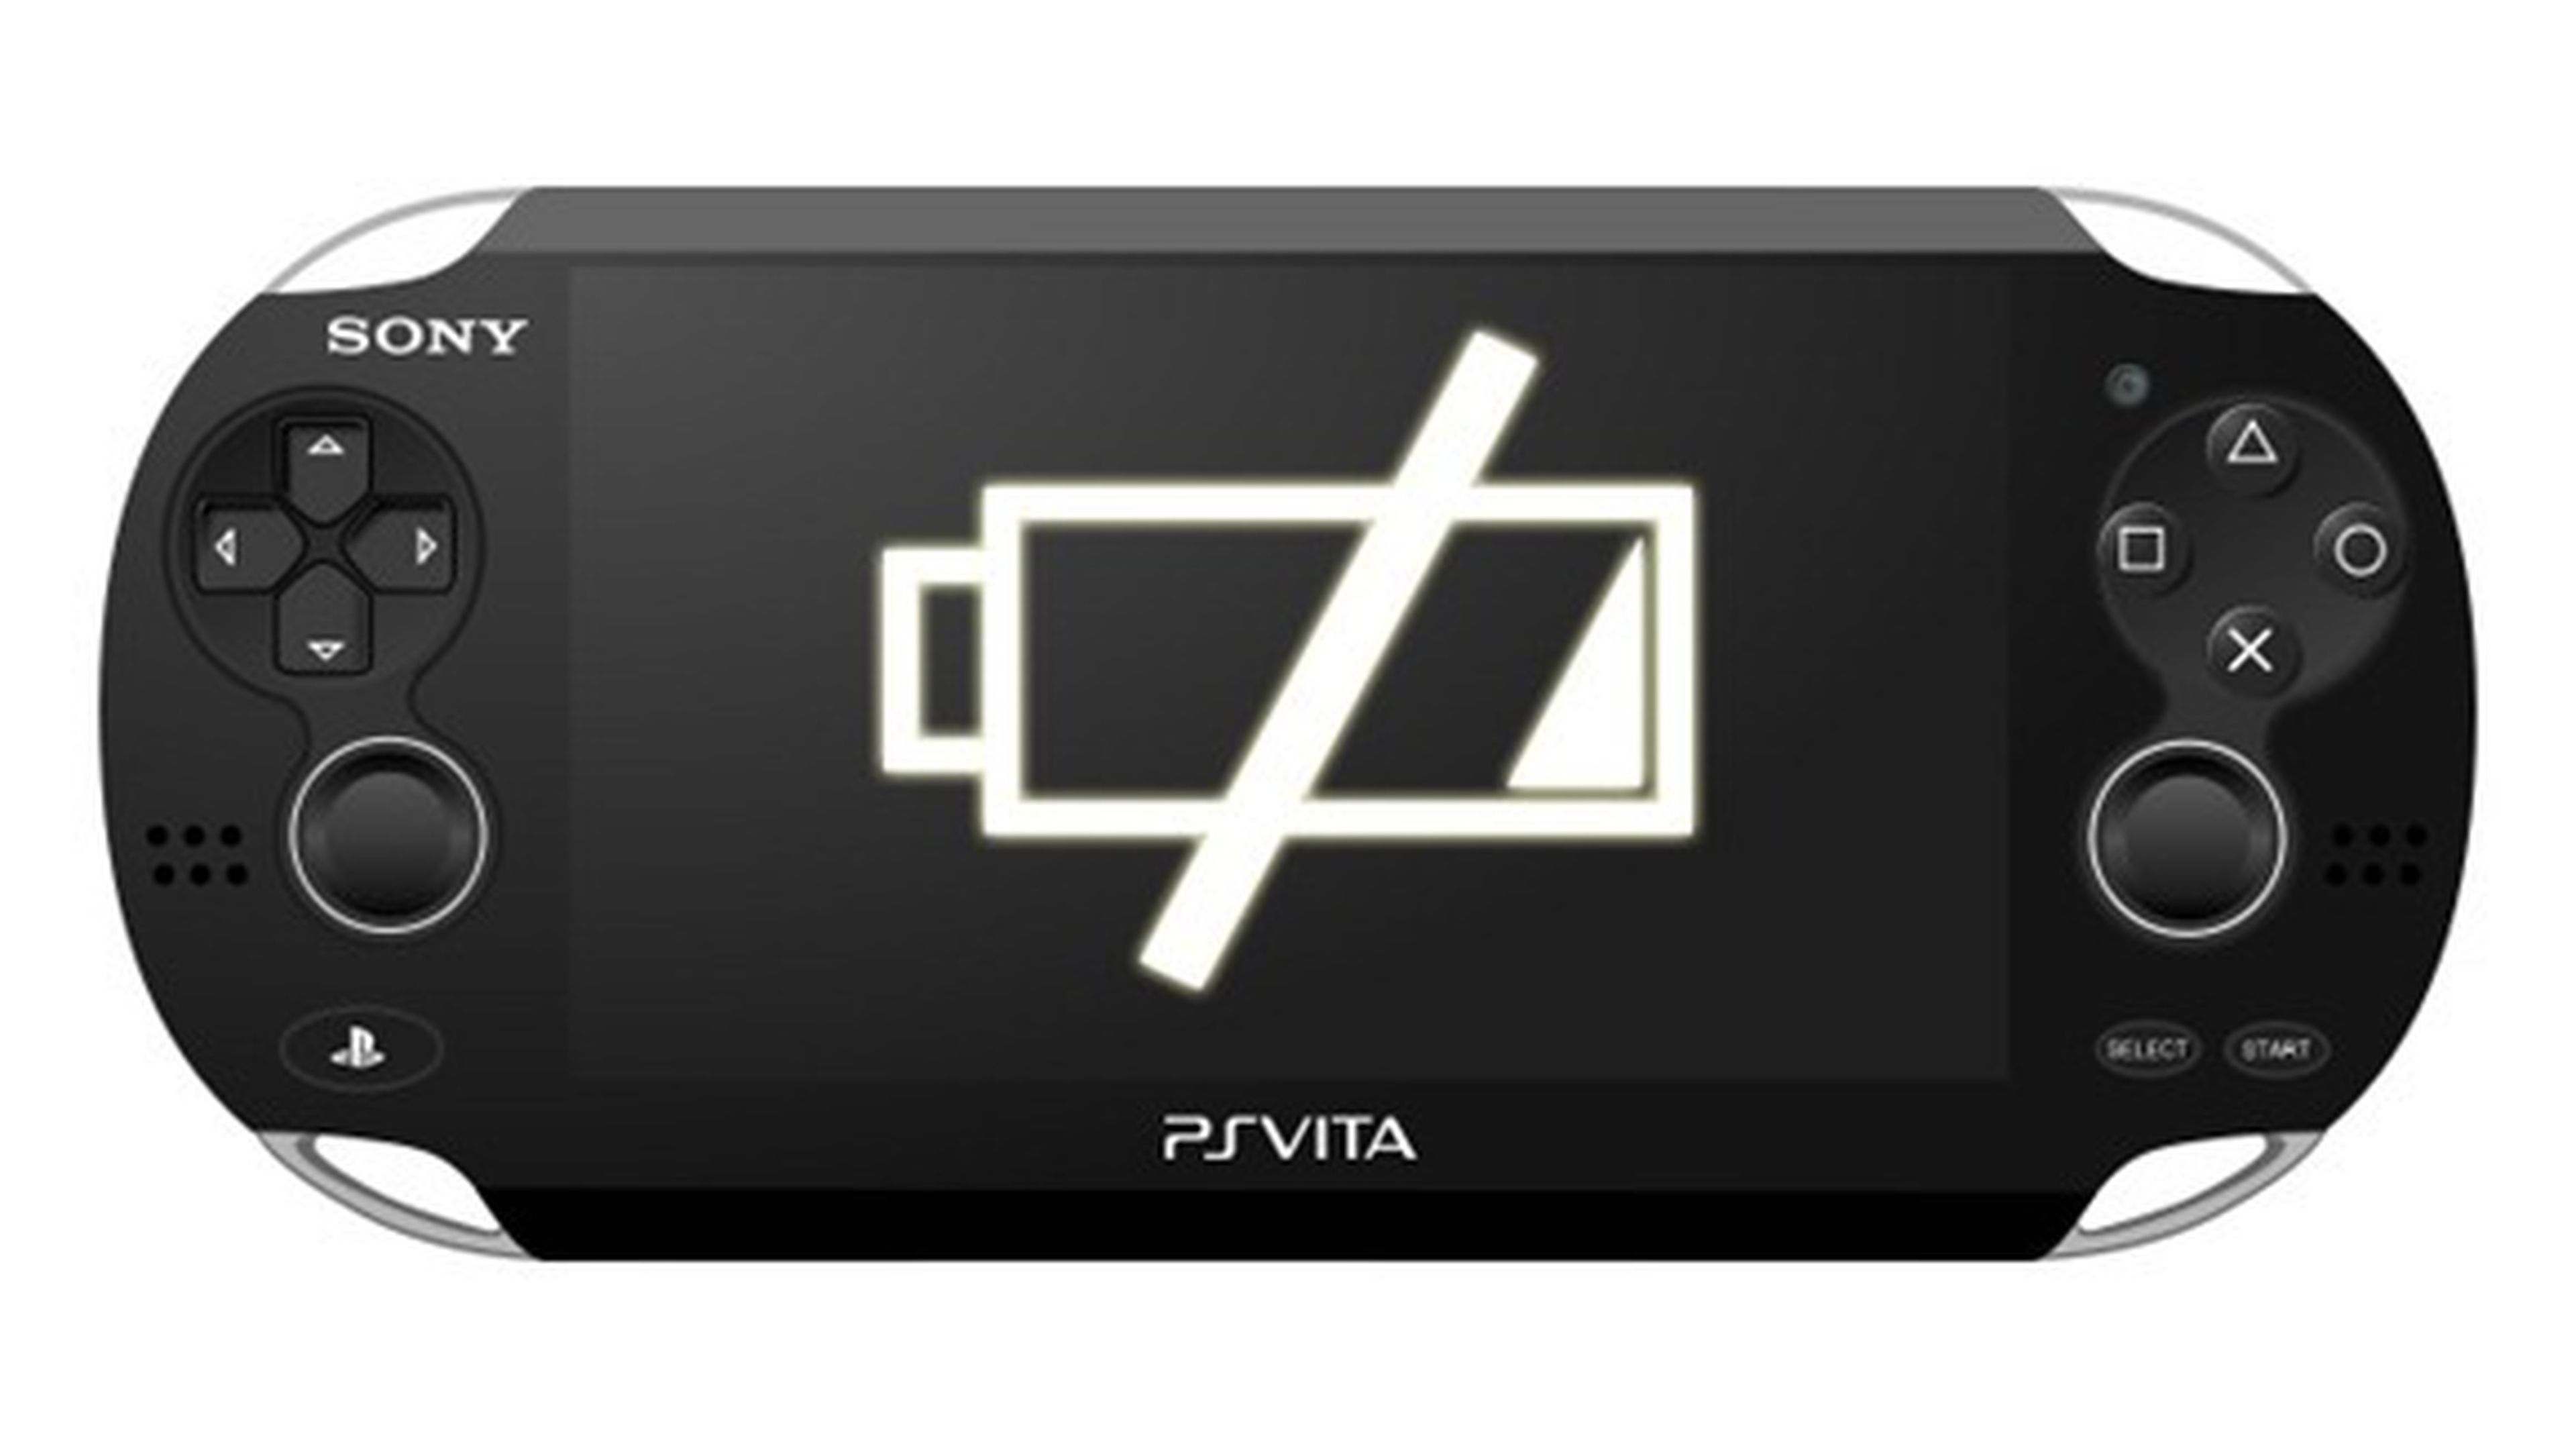 Confirmada la batería externa de PS Vita